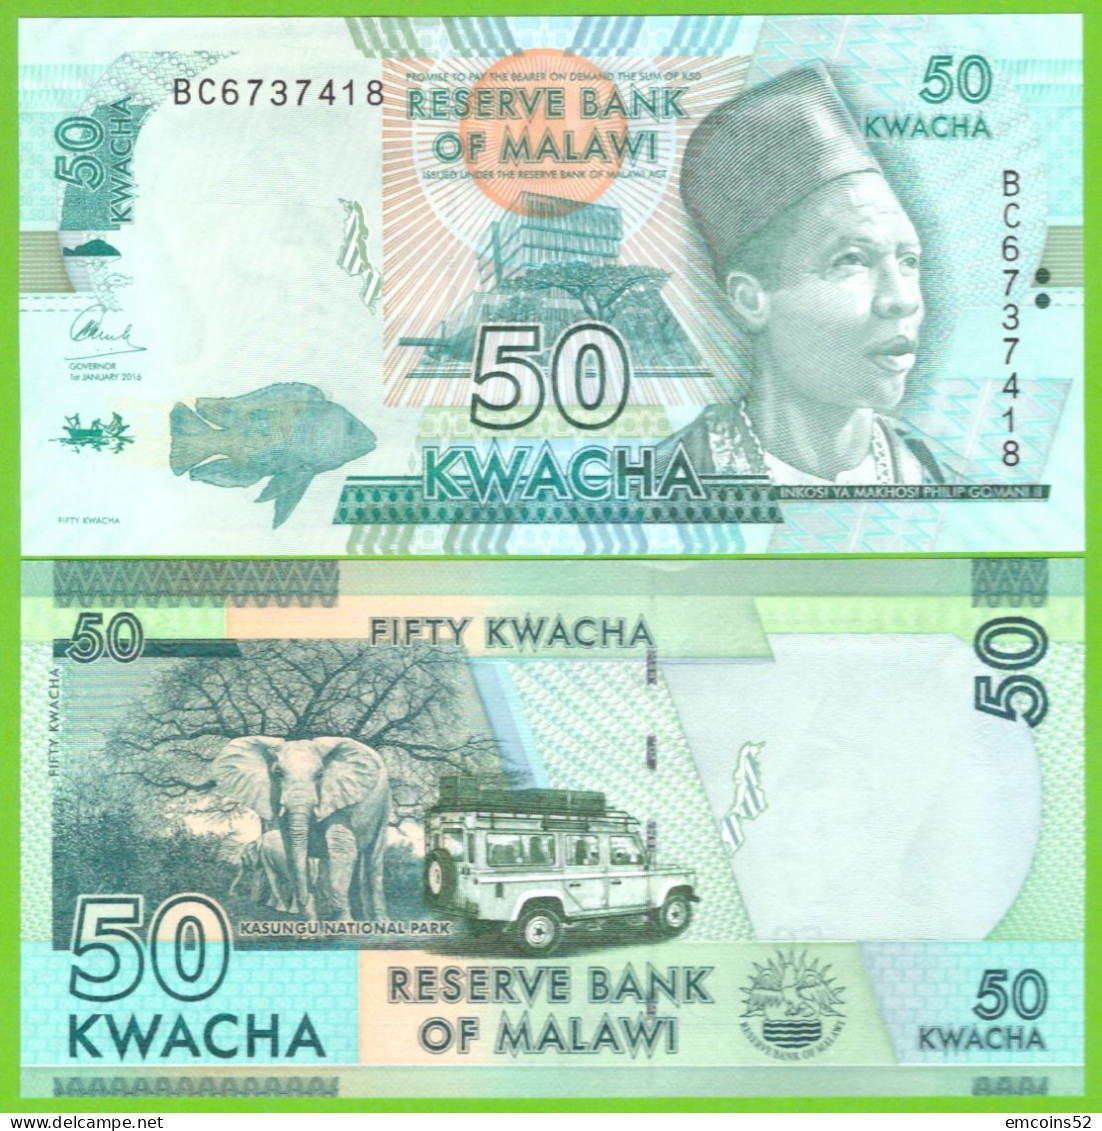 MALAWI 50 KWACHA 2016 P-64c UNC - Malawi